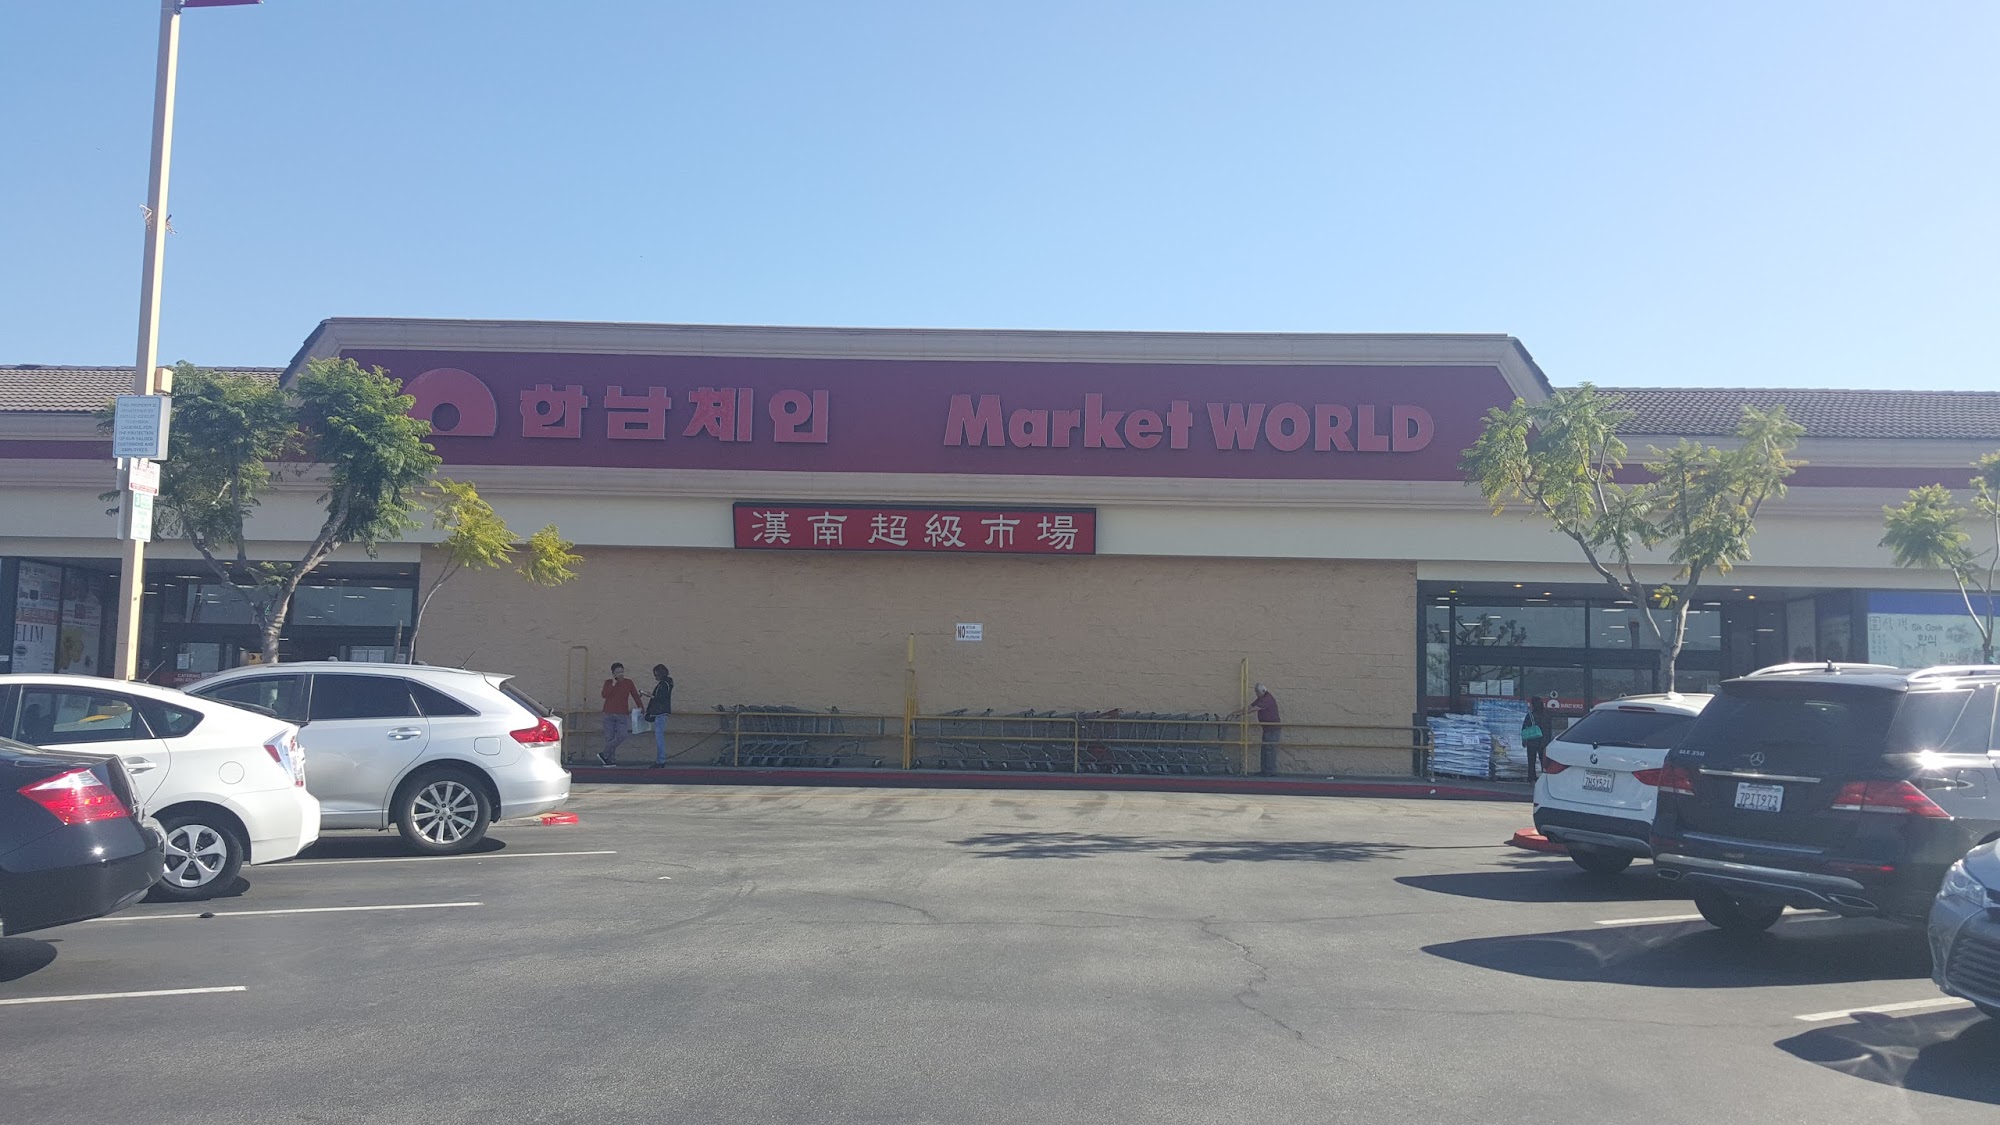 Hannam Chain Market World